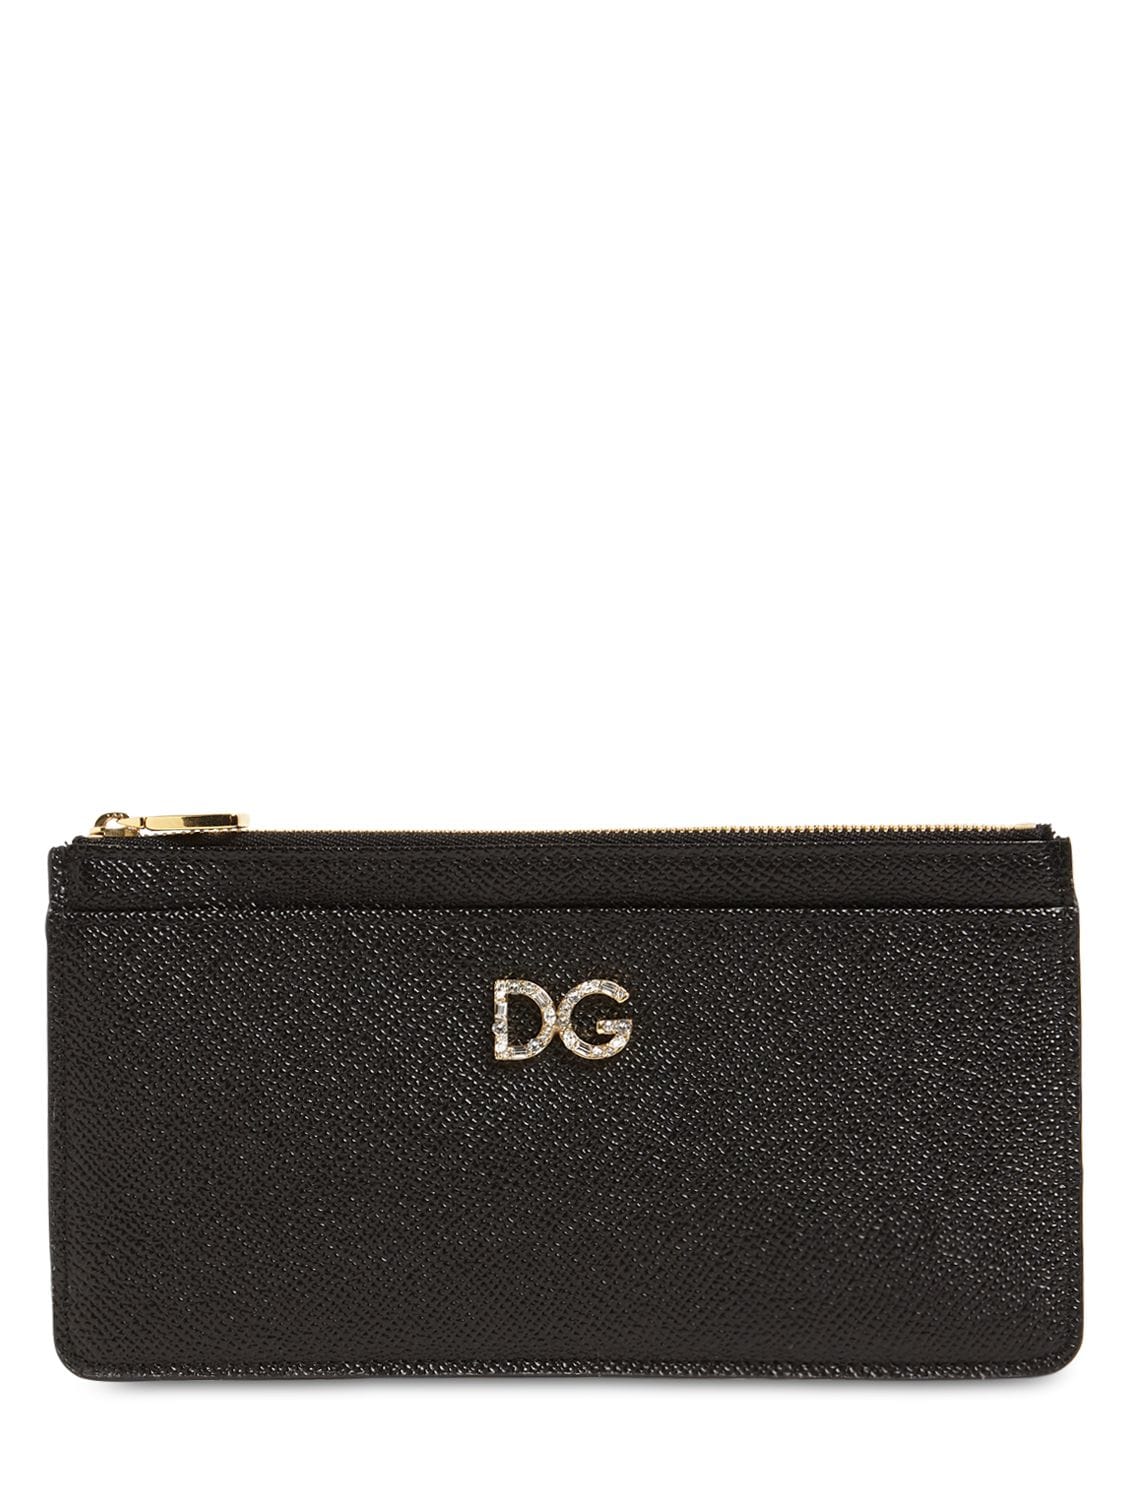 Dolce & Gabbana Dauphine Leather Zip Card Holder W/ Logo In Black